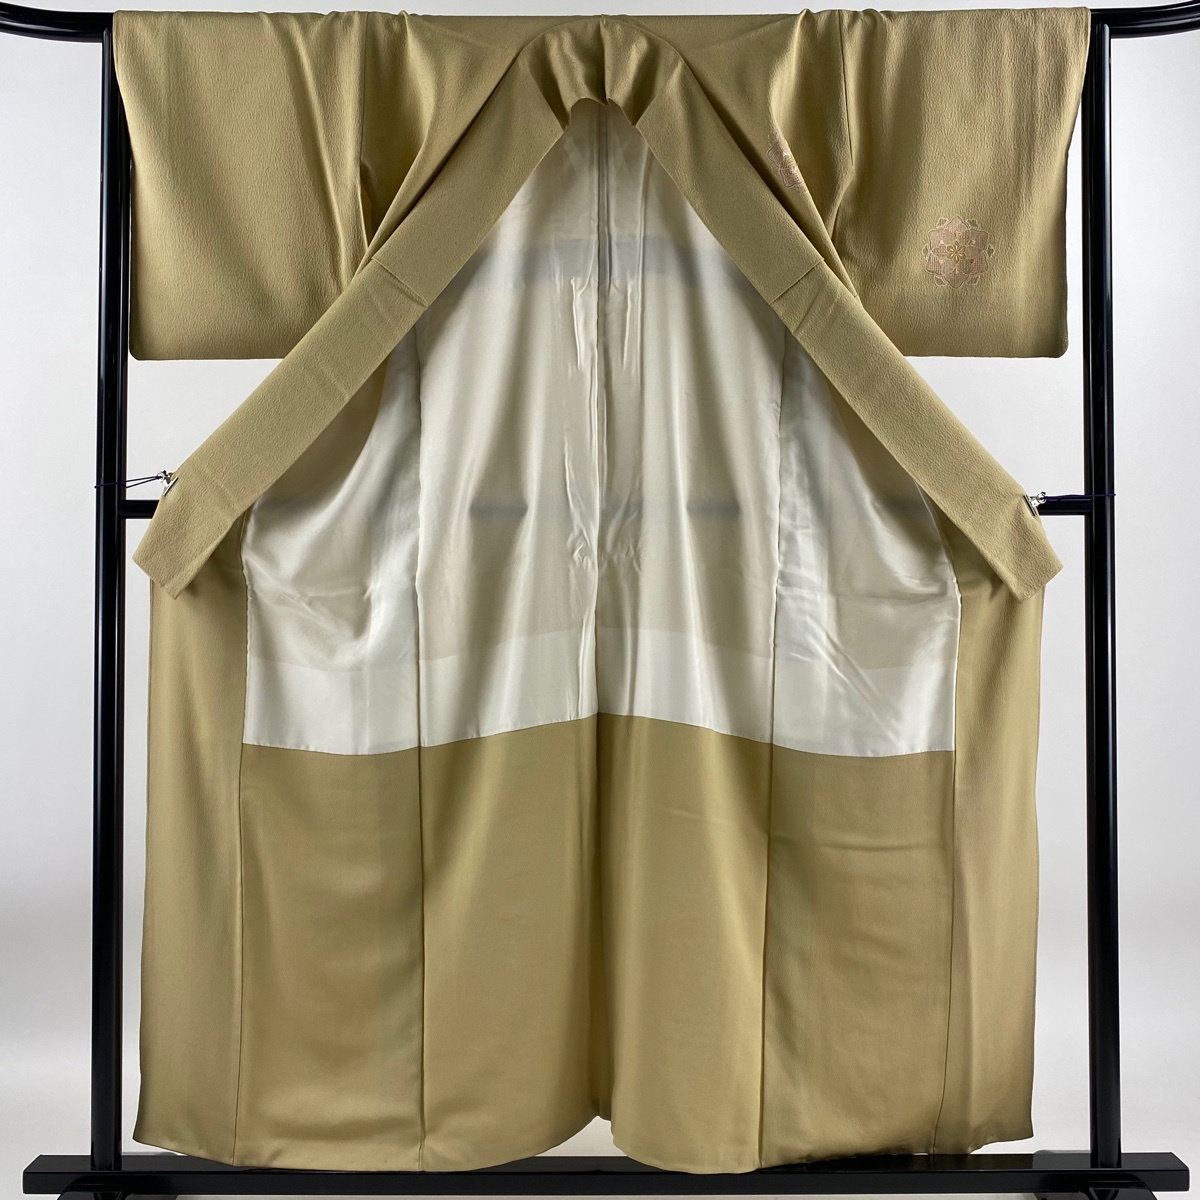  tsukesage length 157cm sleeve length 66cm M.. writing embroidery beige silk preeminence goods [ used ]